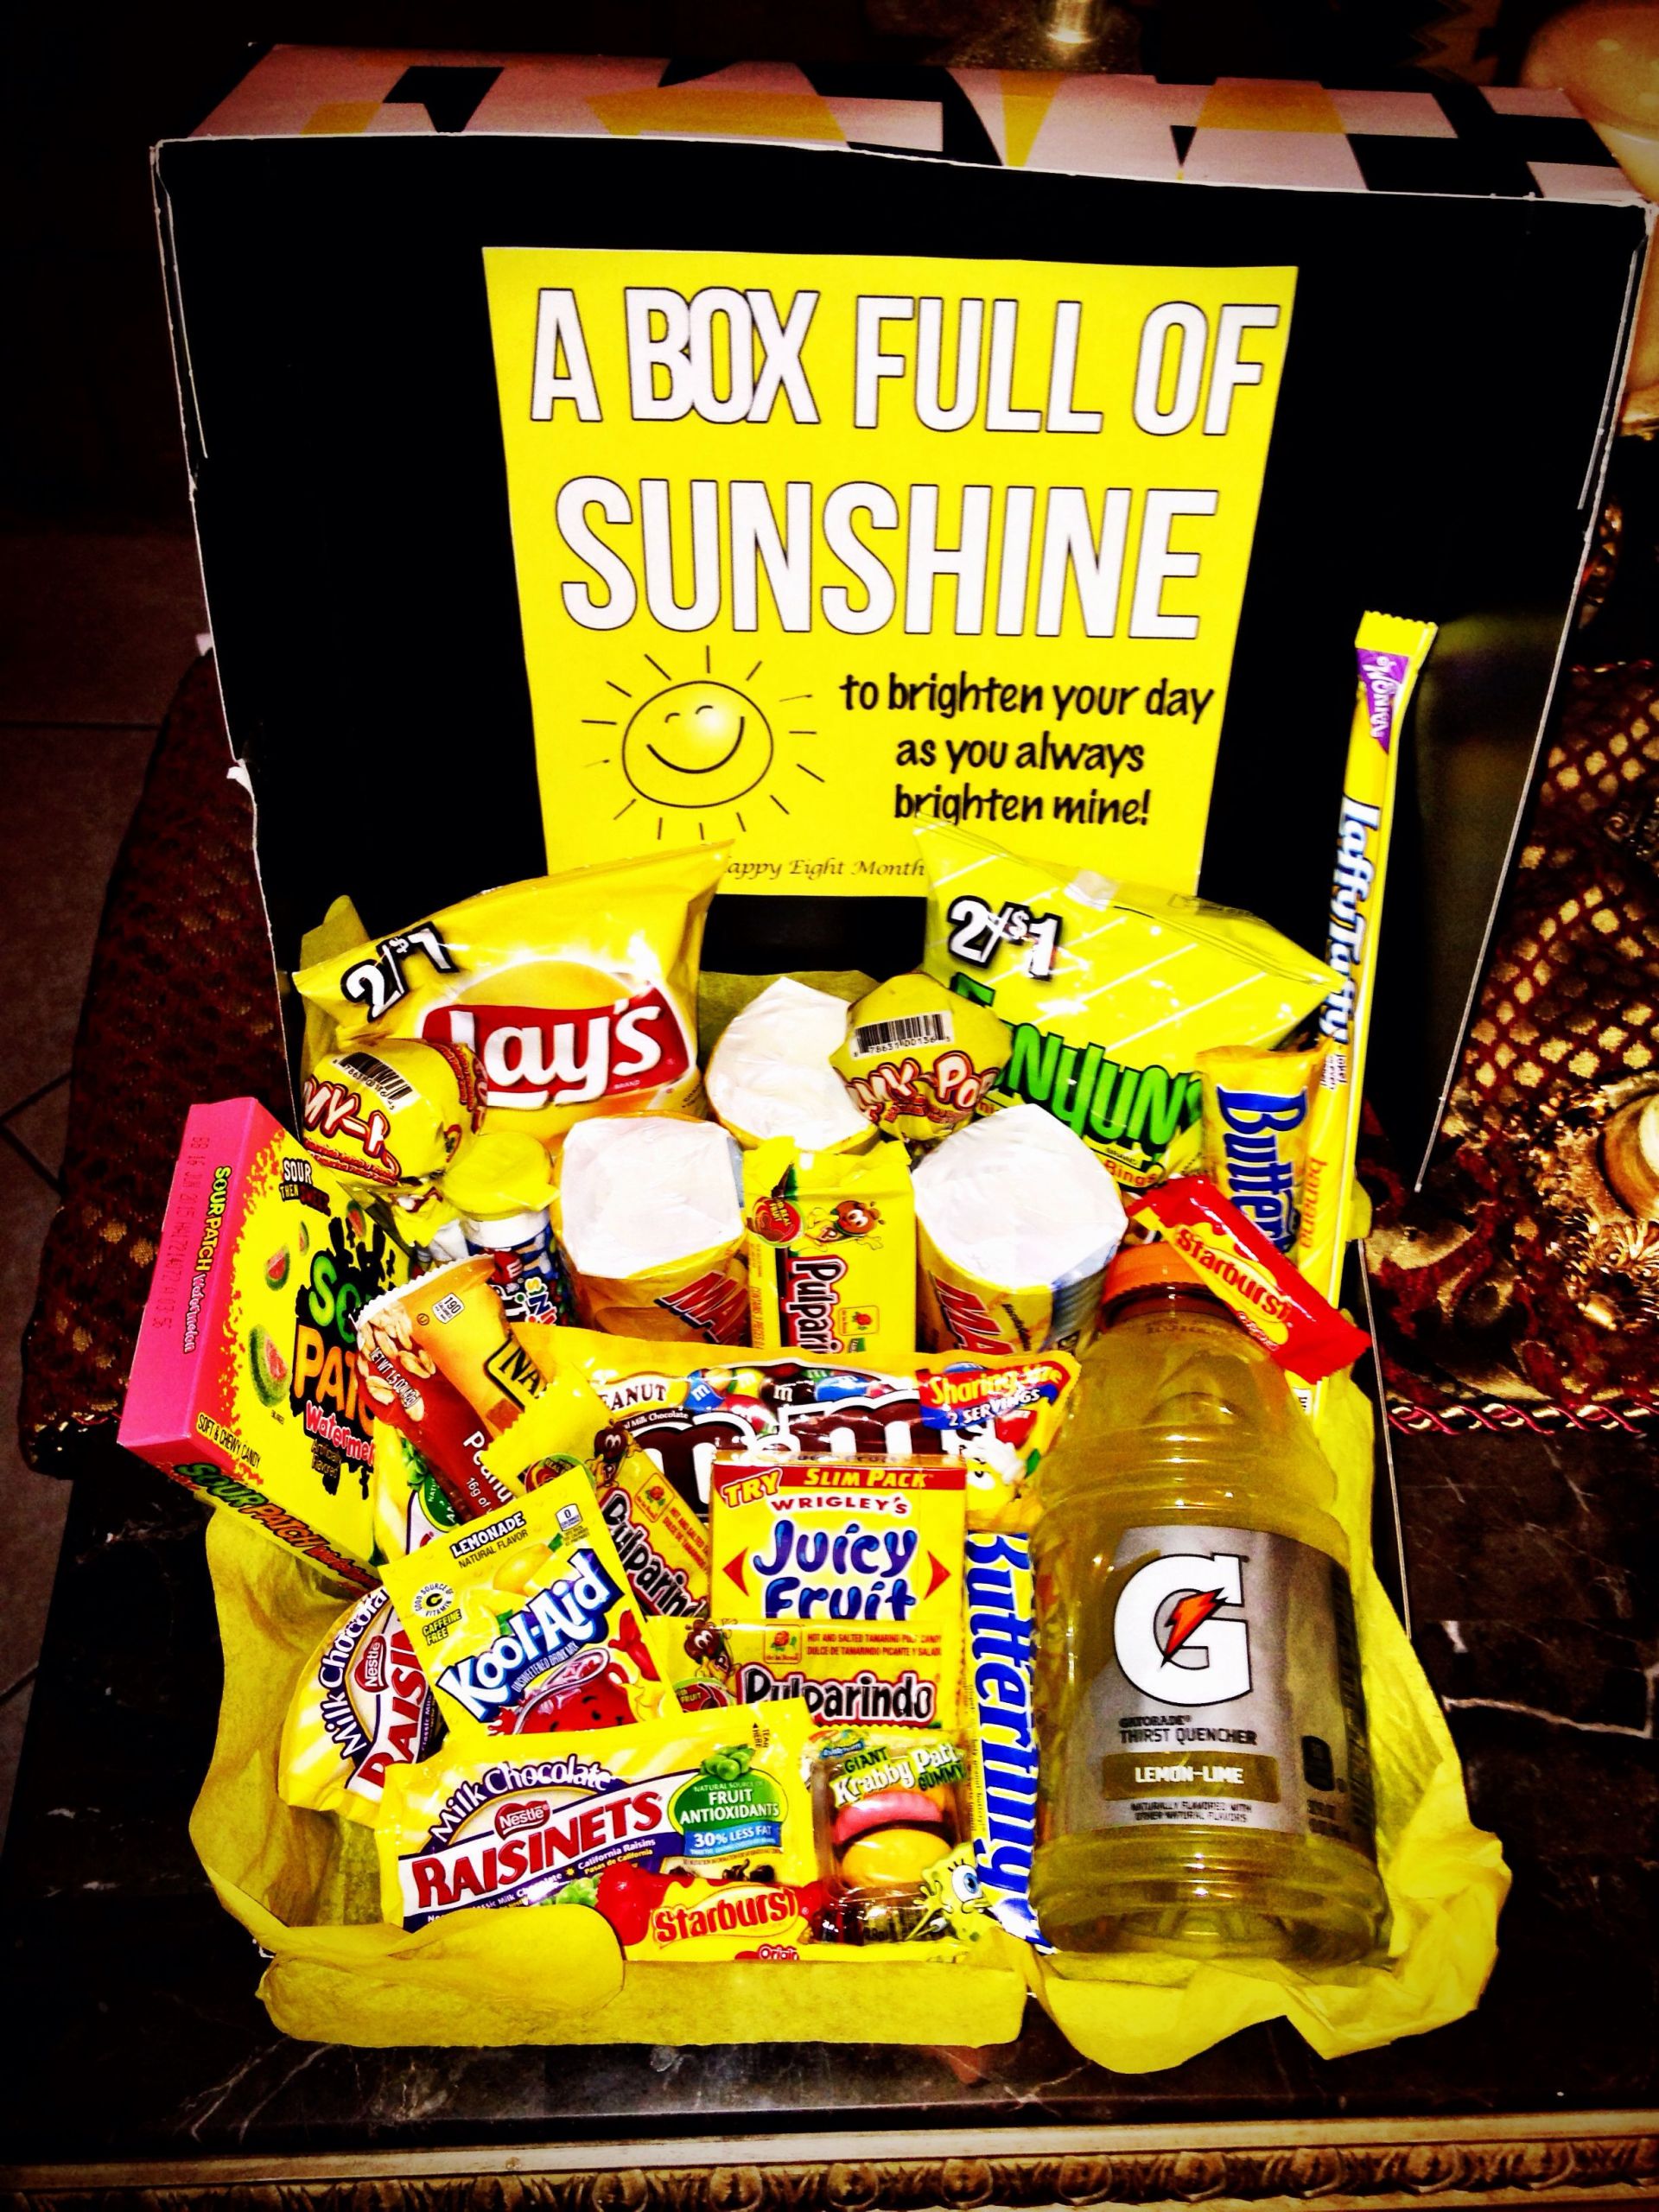 Cute Gift Basket Ideas For Boyfriend
 "Box Full Sunshine" Gift For The Boyfriend